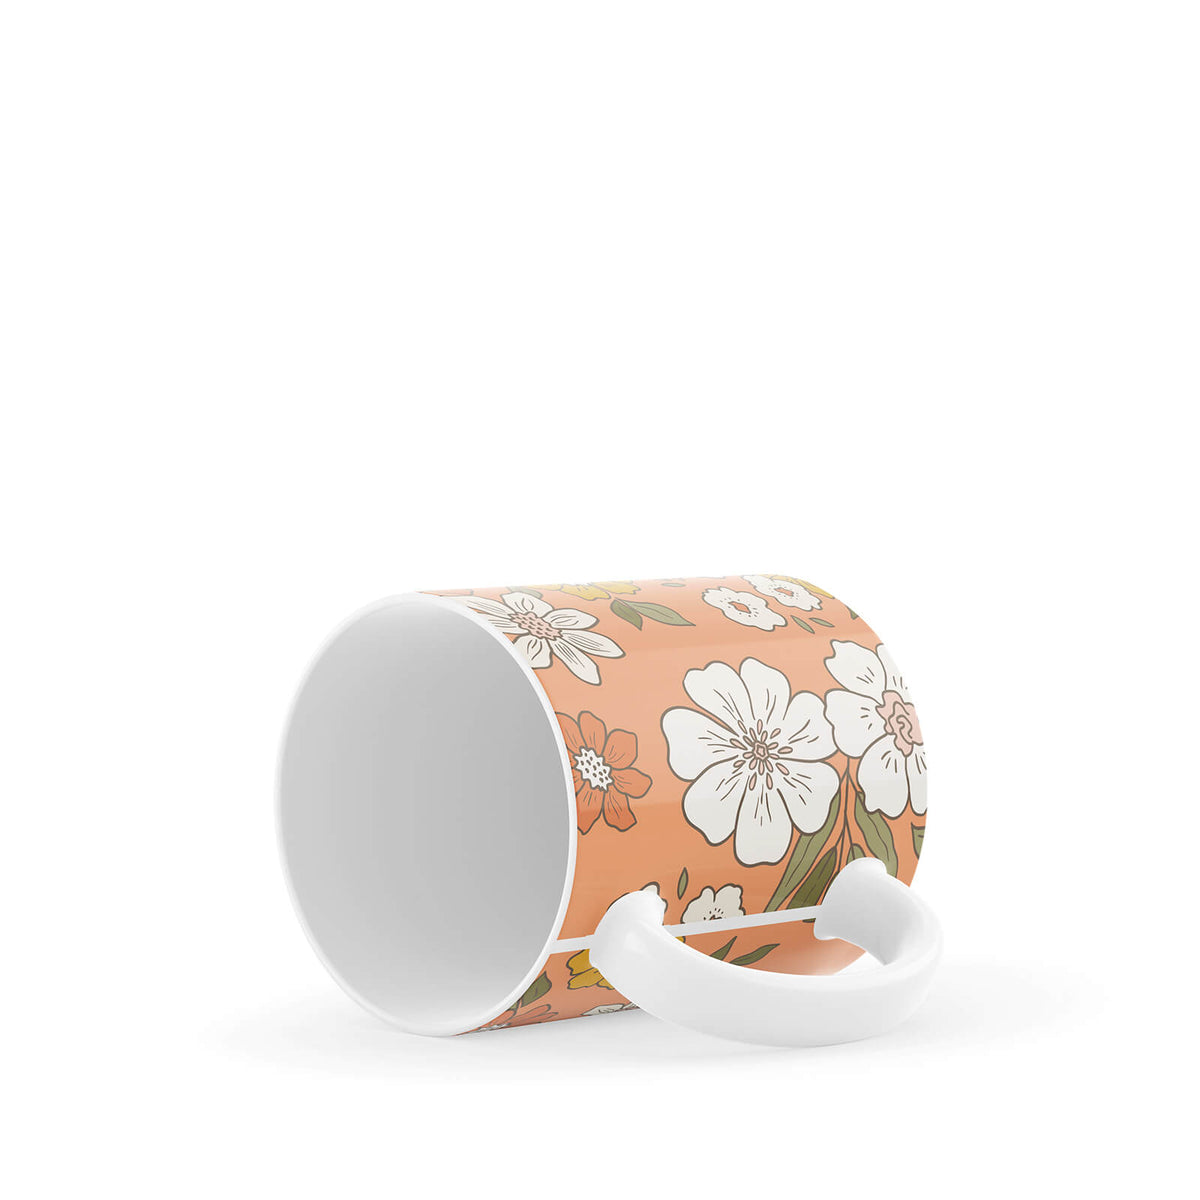 Orange Floral Ceramic Mug